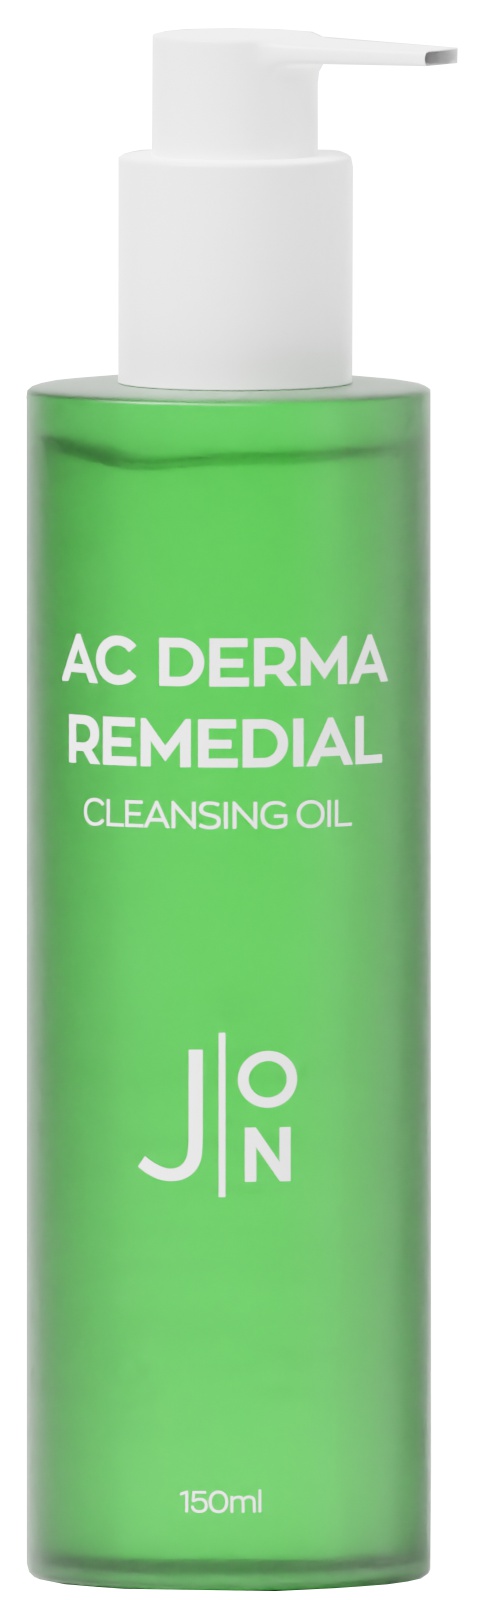 J|ON AC Derma Remedial Cleansing Oil